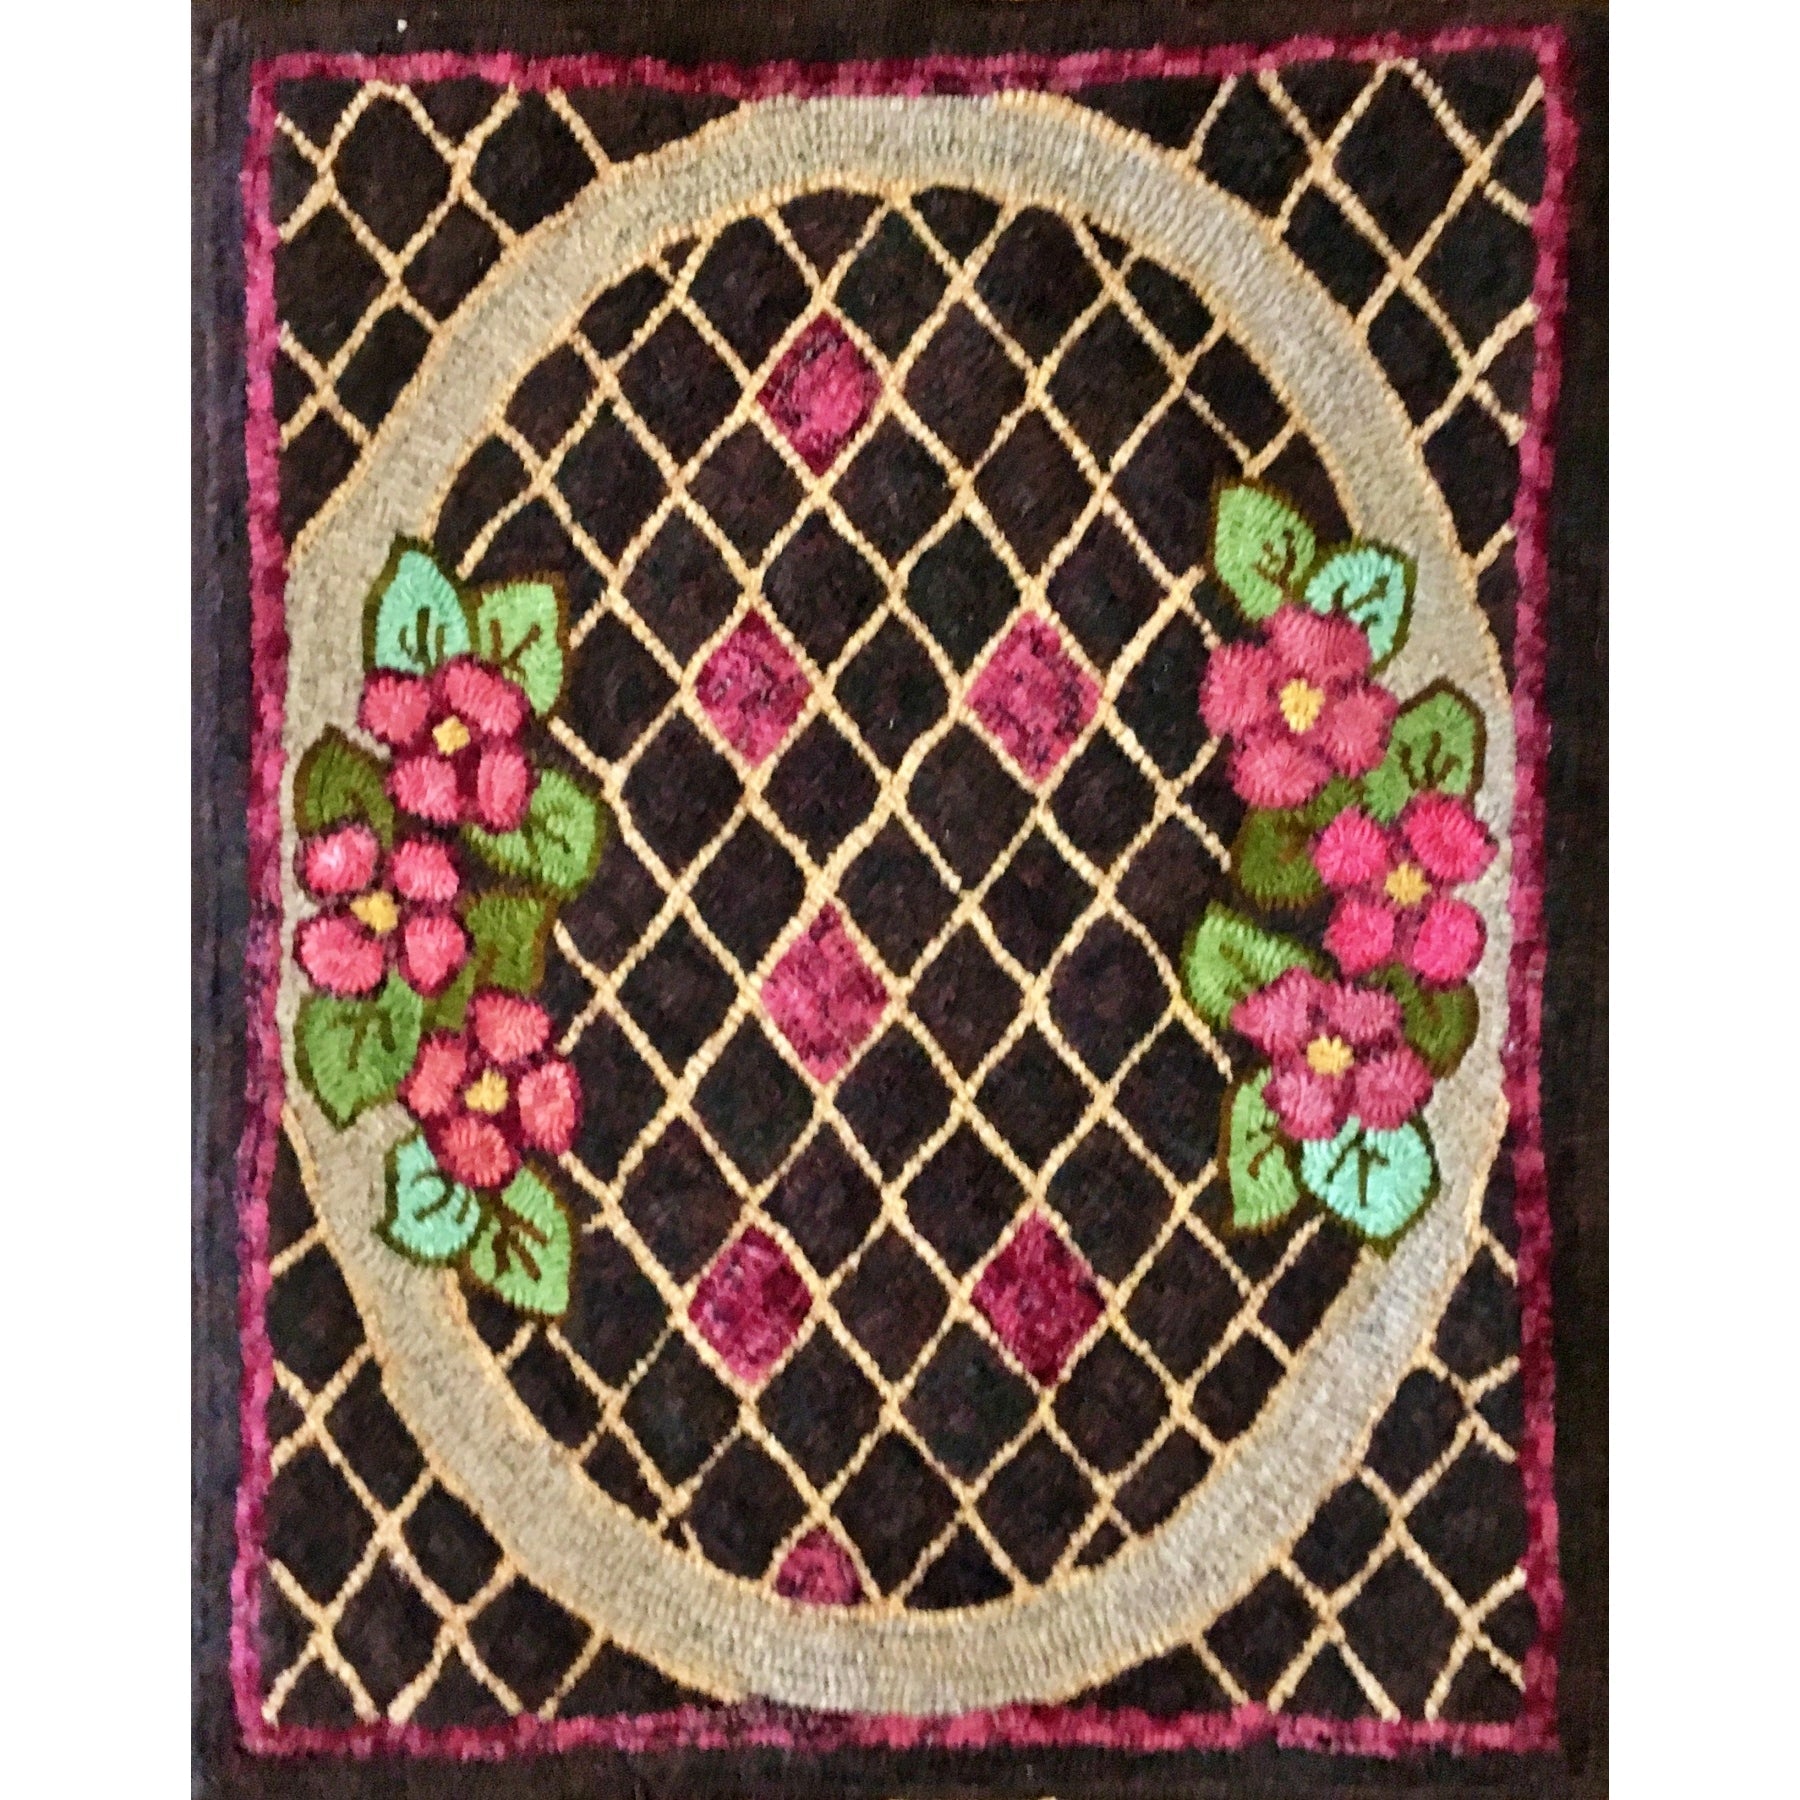 Grandmother's Rug, rug hooked by Darleen Pezza